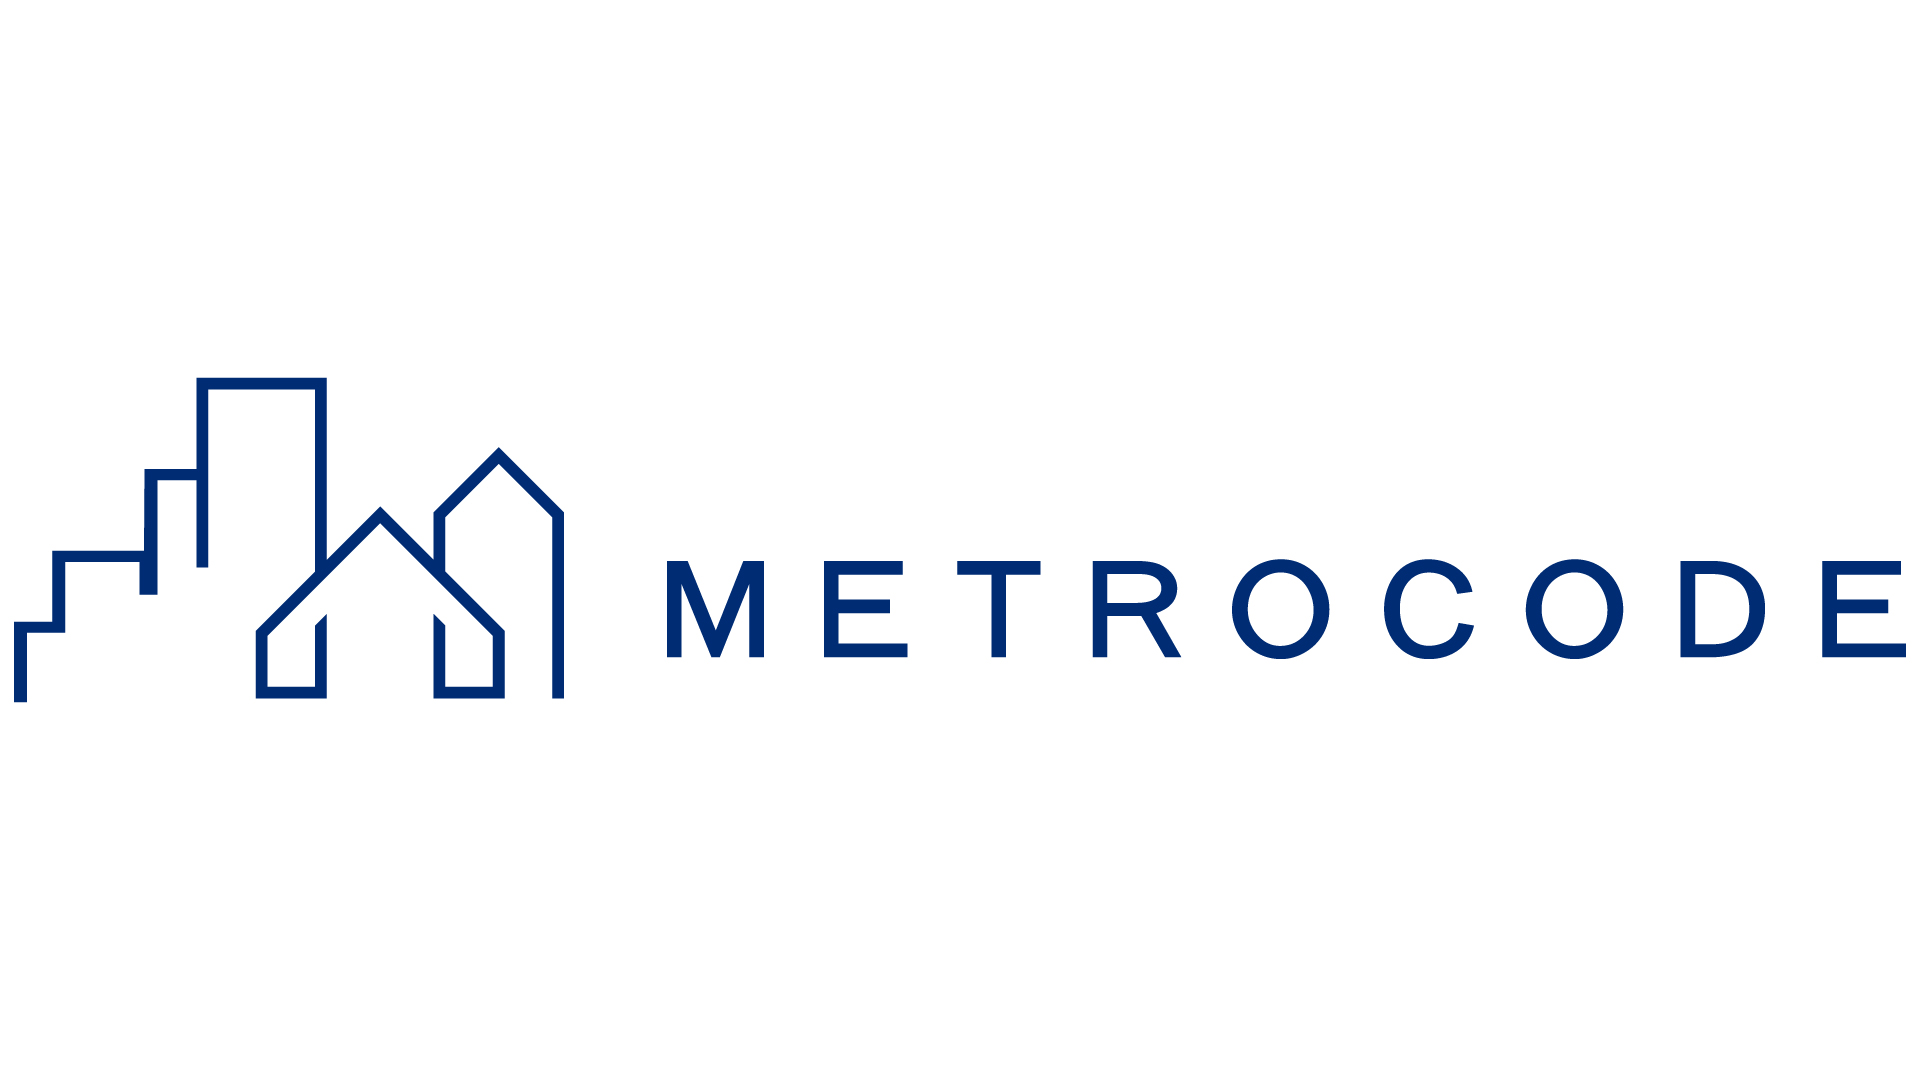 Metrocode